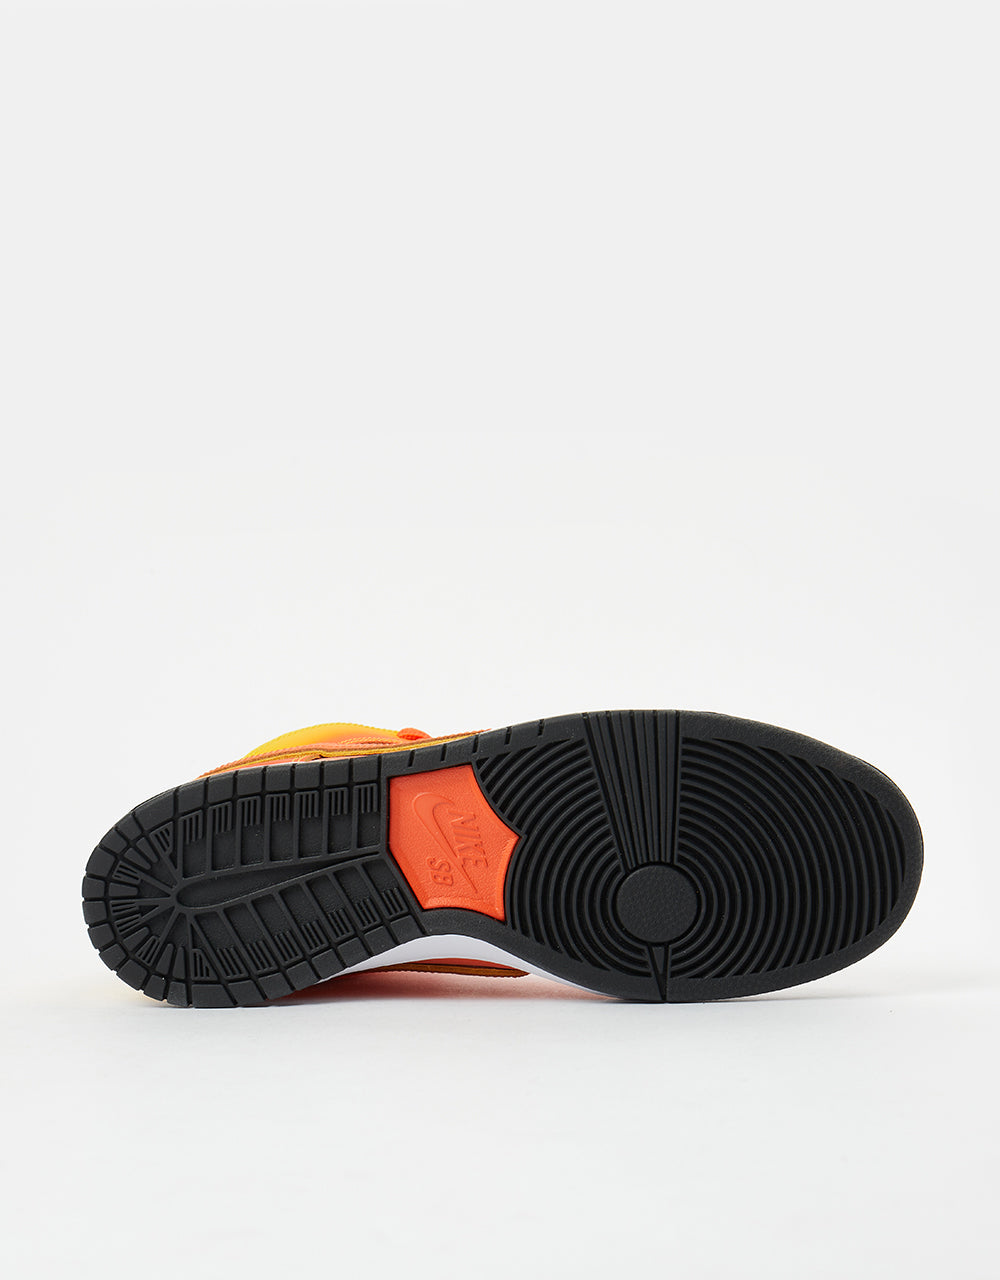 Nike SB 'Candy Corn' Dunk High Pro Skate Shoes - Amarillo/Orange-White-Black